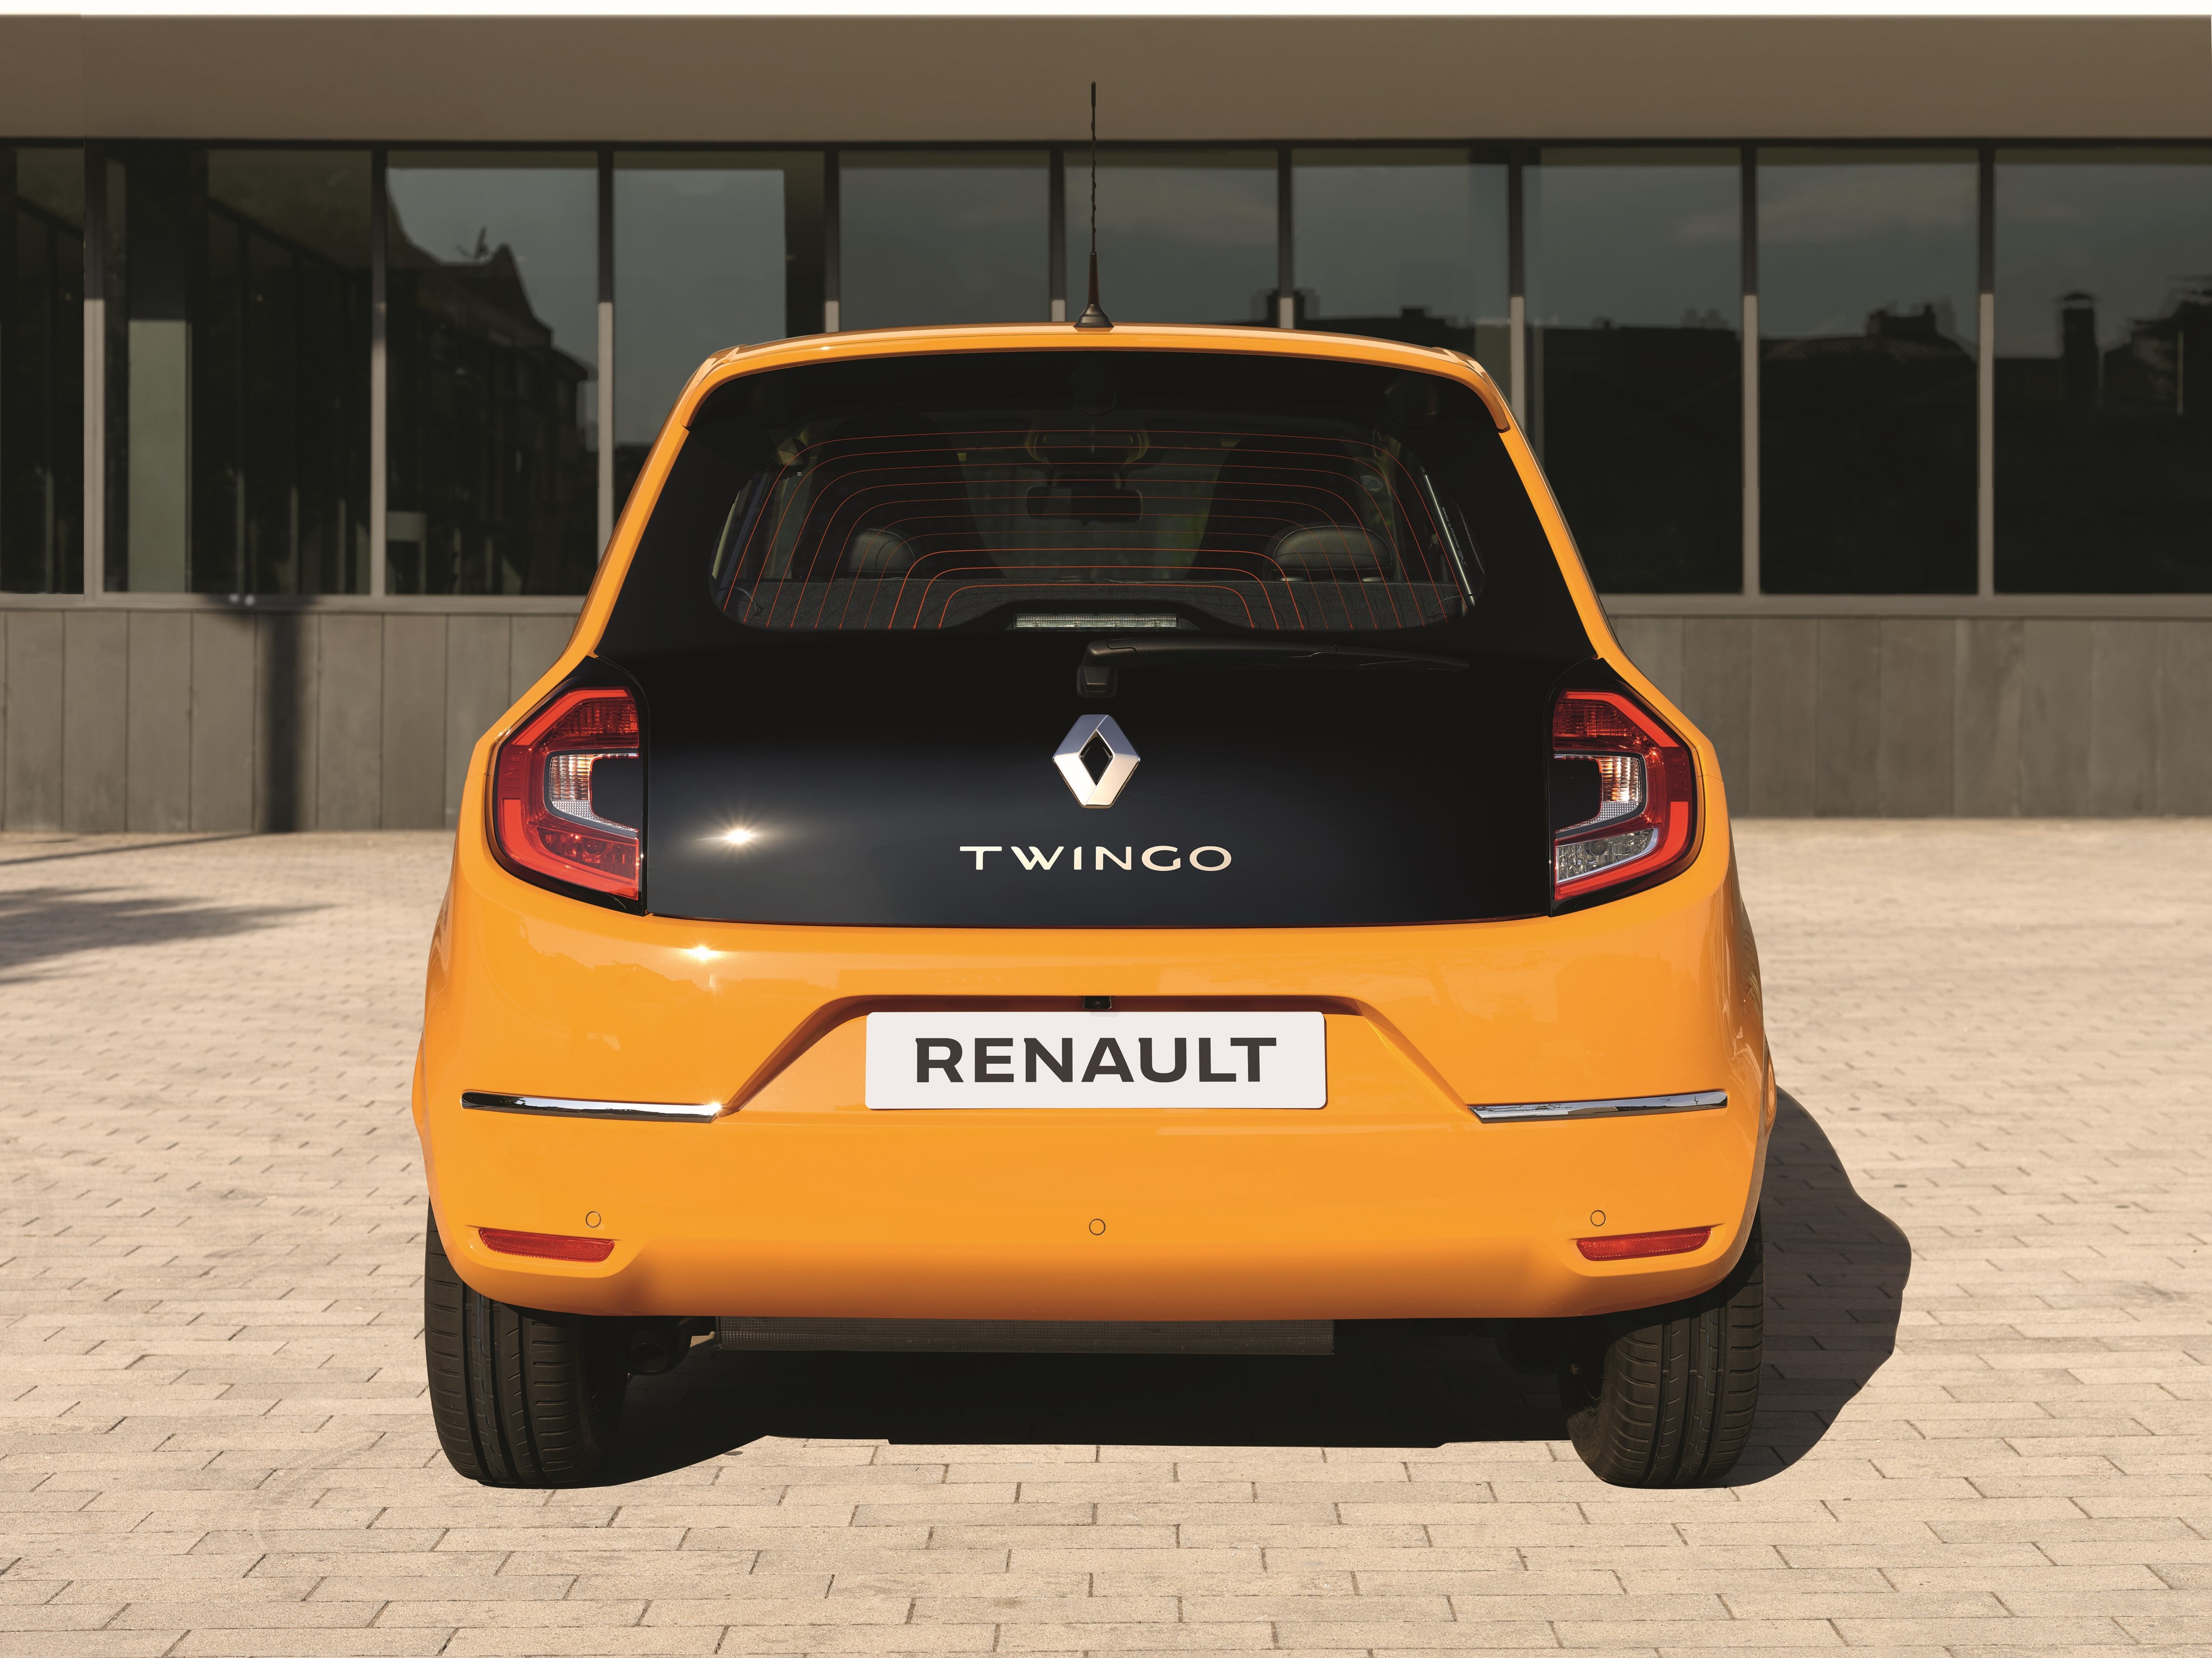 Renault Twingo best specifications